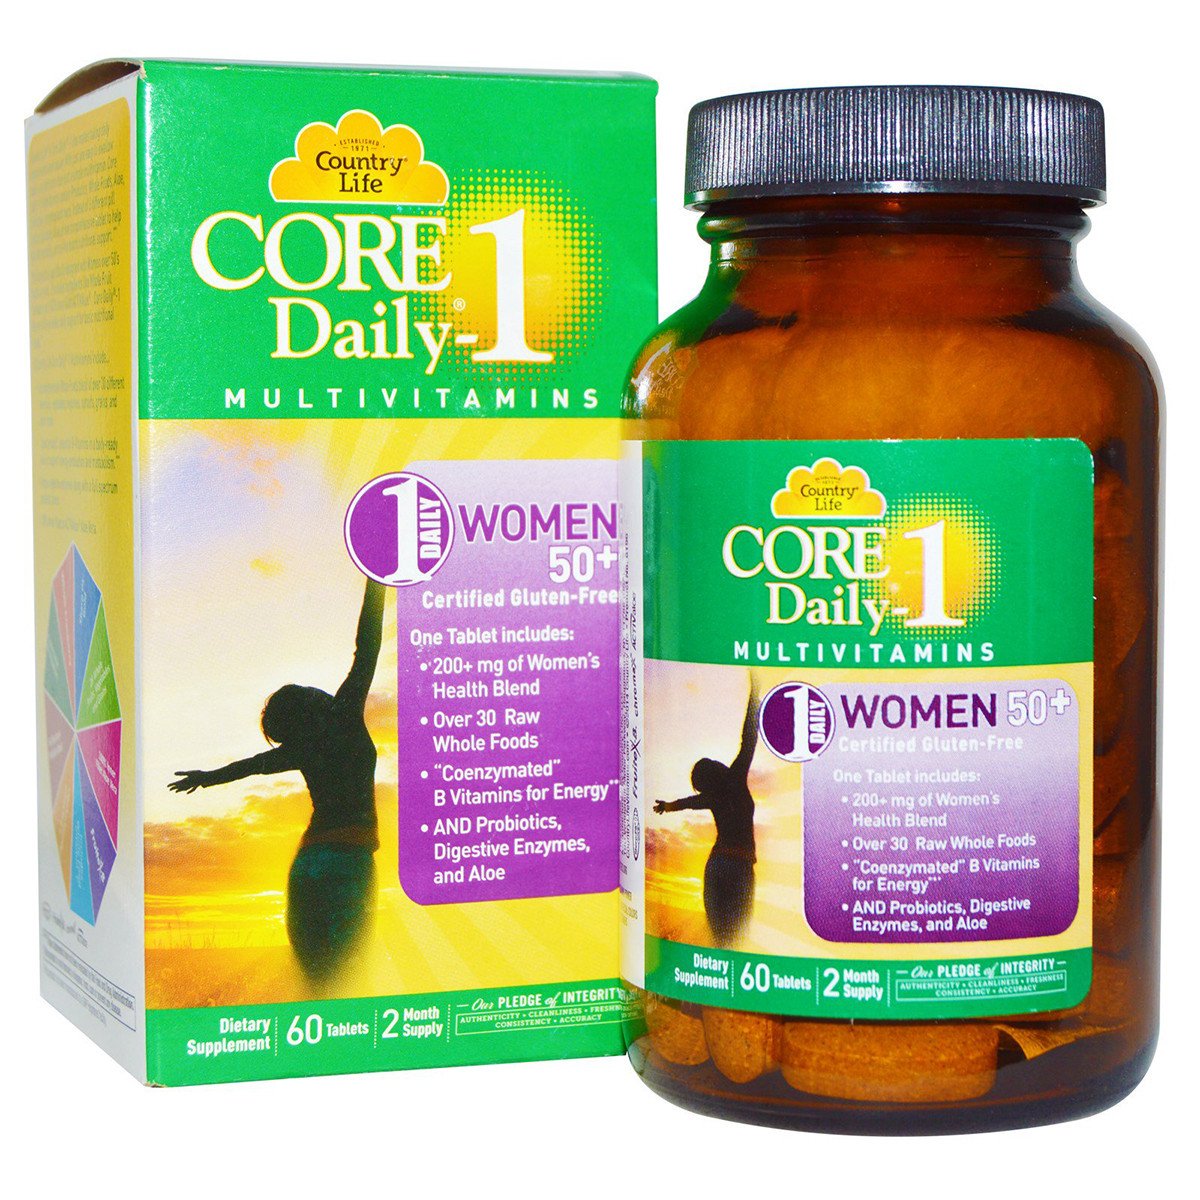 Country Life Мультивитамины для Женщин, 50+, Core Daily-1 for Women 50+, Country Life, 60 таблеток, , 